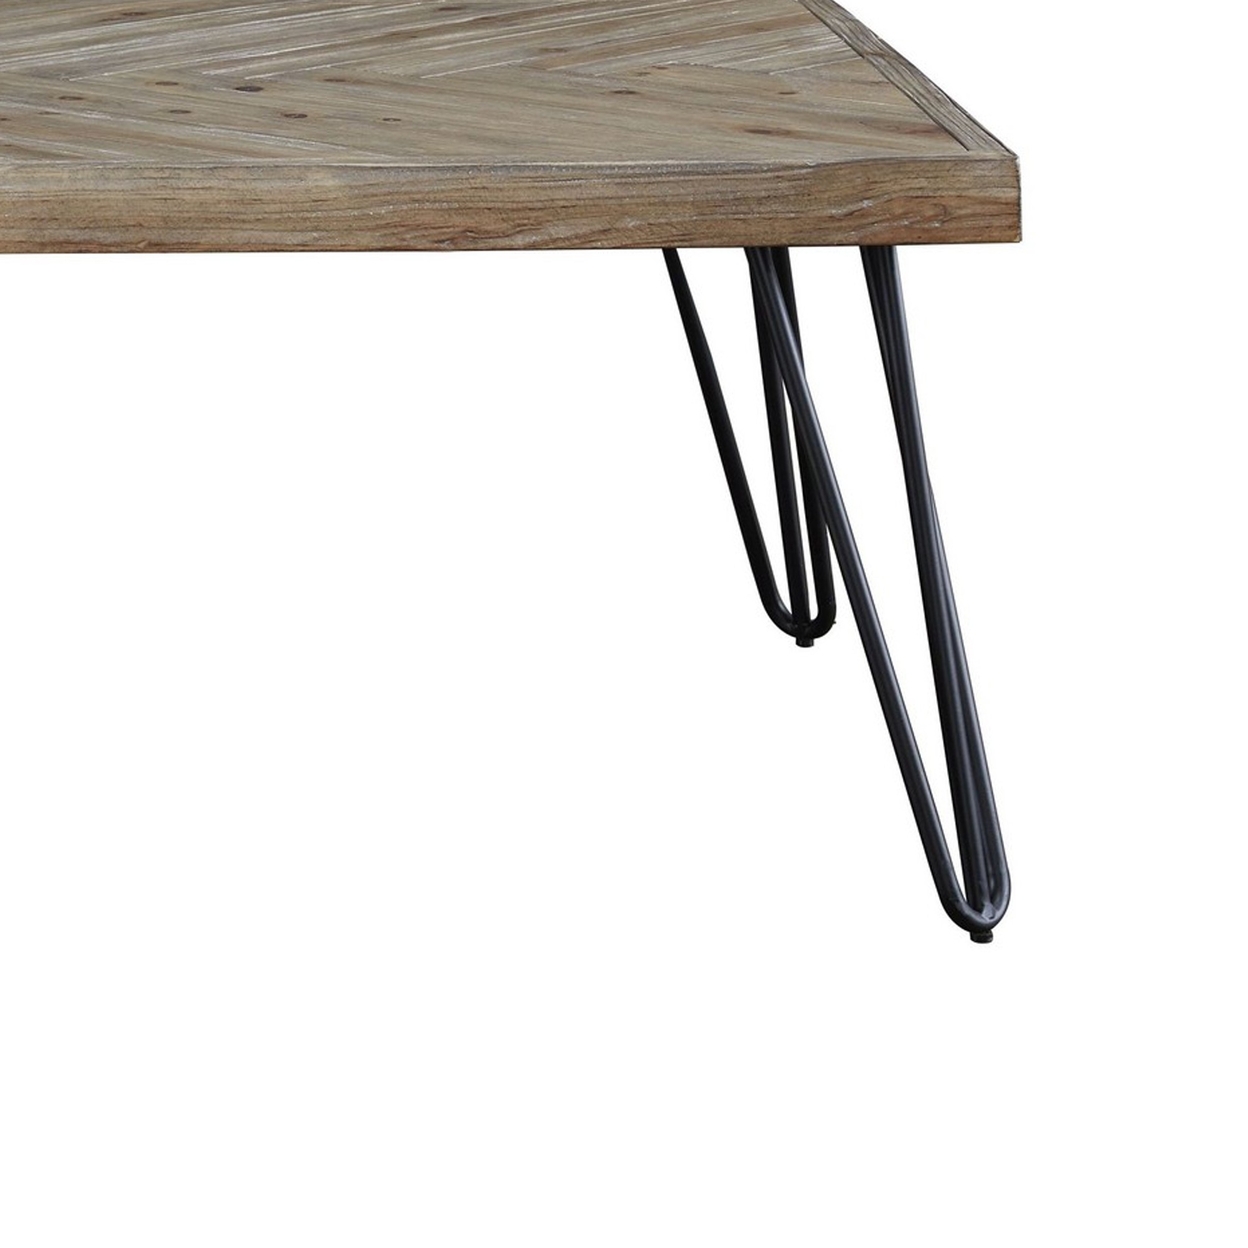 Anne 48 Inch Coffee Table, Herringbone Wood Surface, Black Hairpin Legs- Saltoro Sherpi